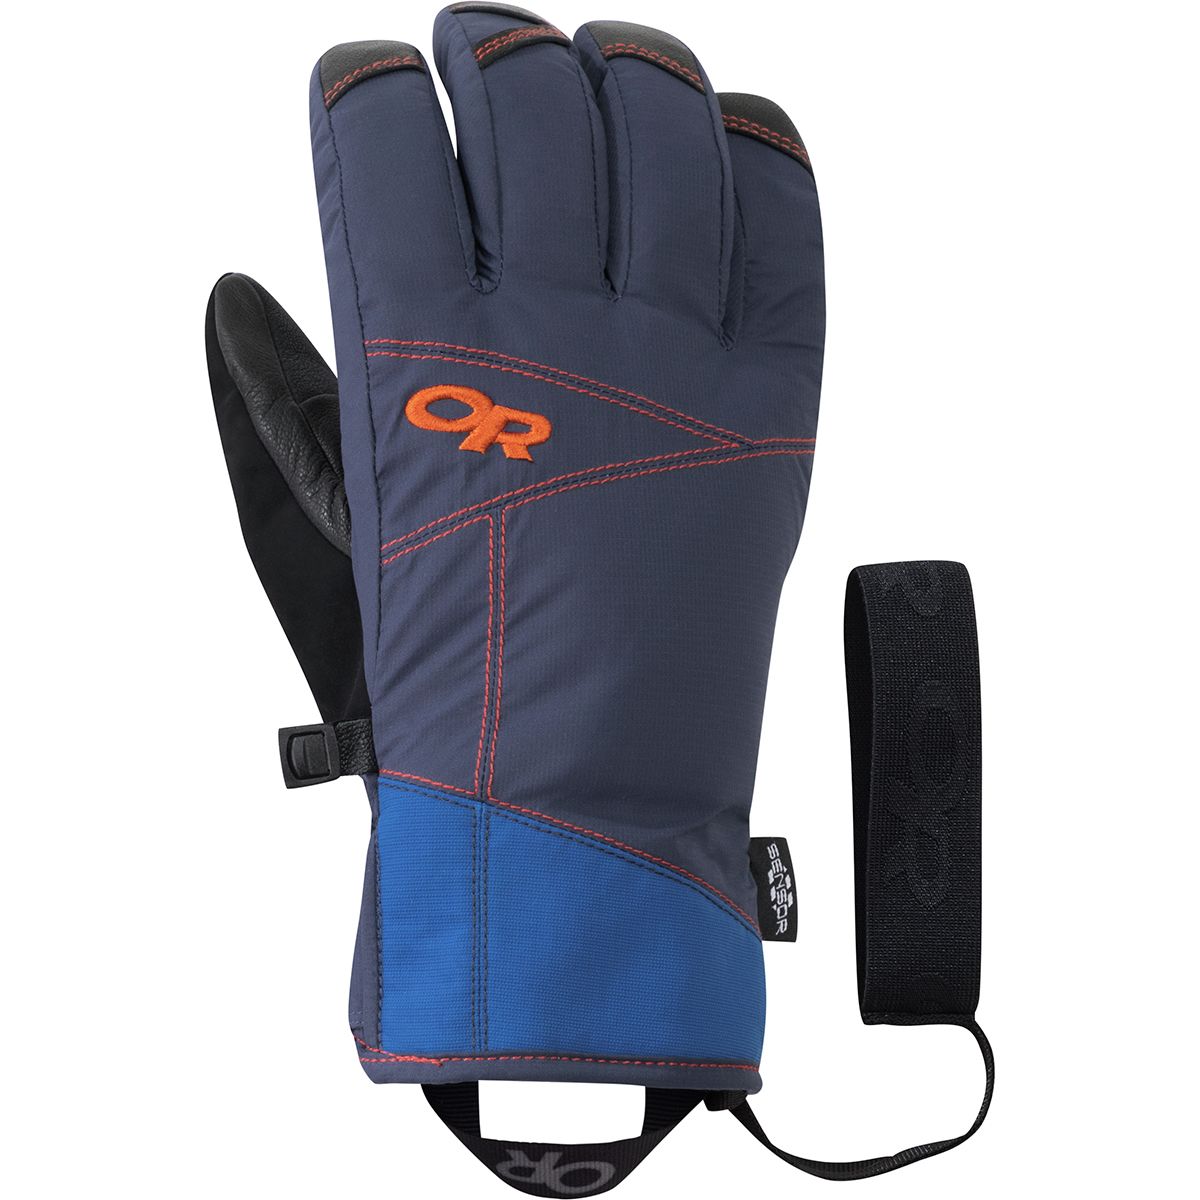 Outdoor Research Illuminator Sensor Glove - Men's Cobalt/Naval Blue/Burnt Orange